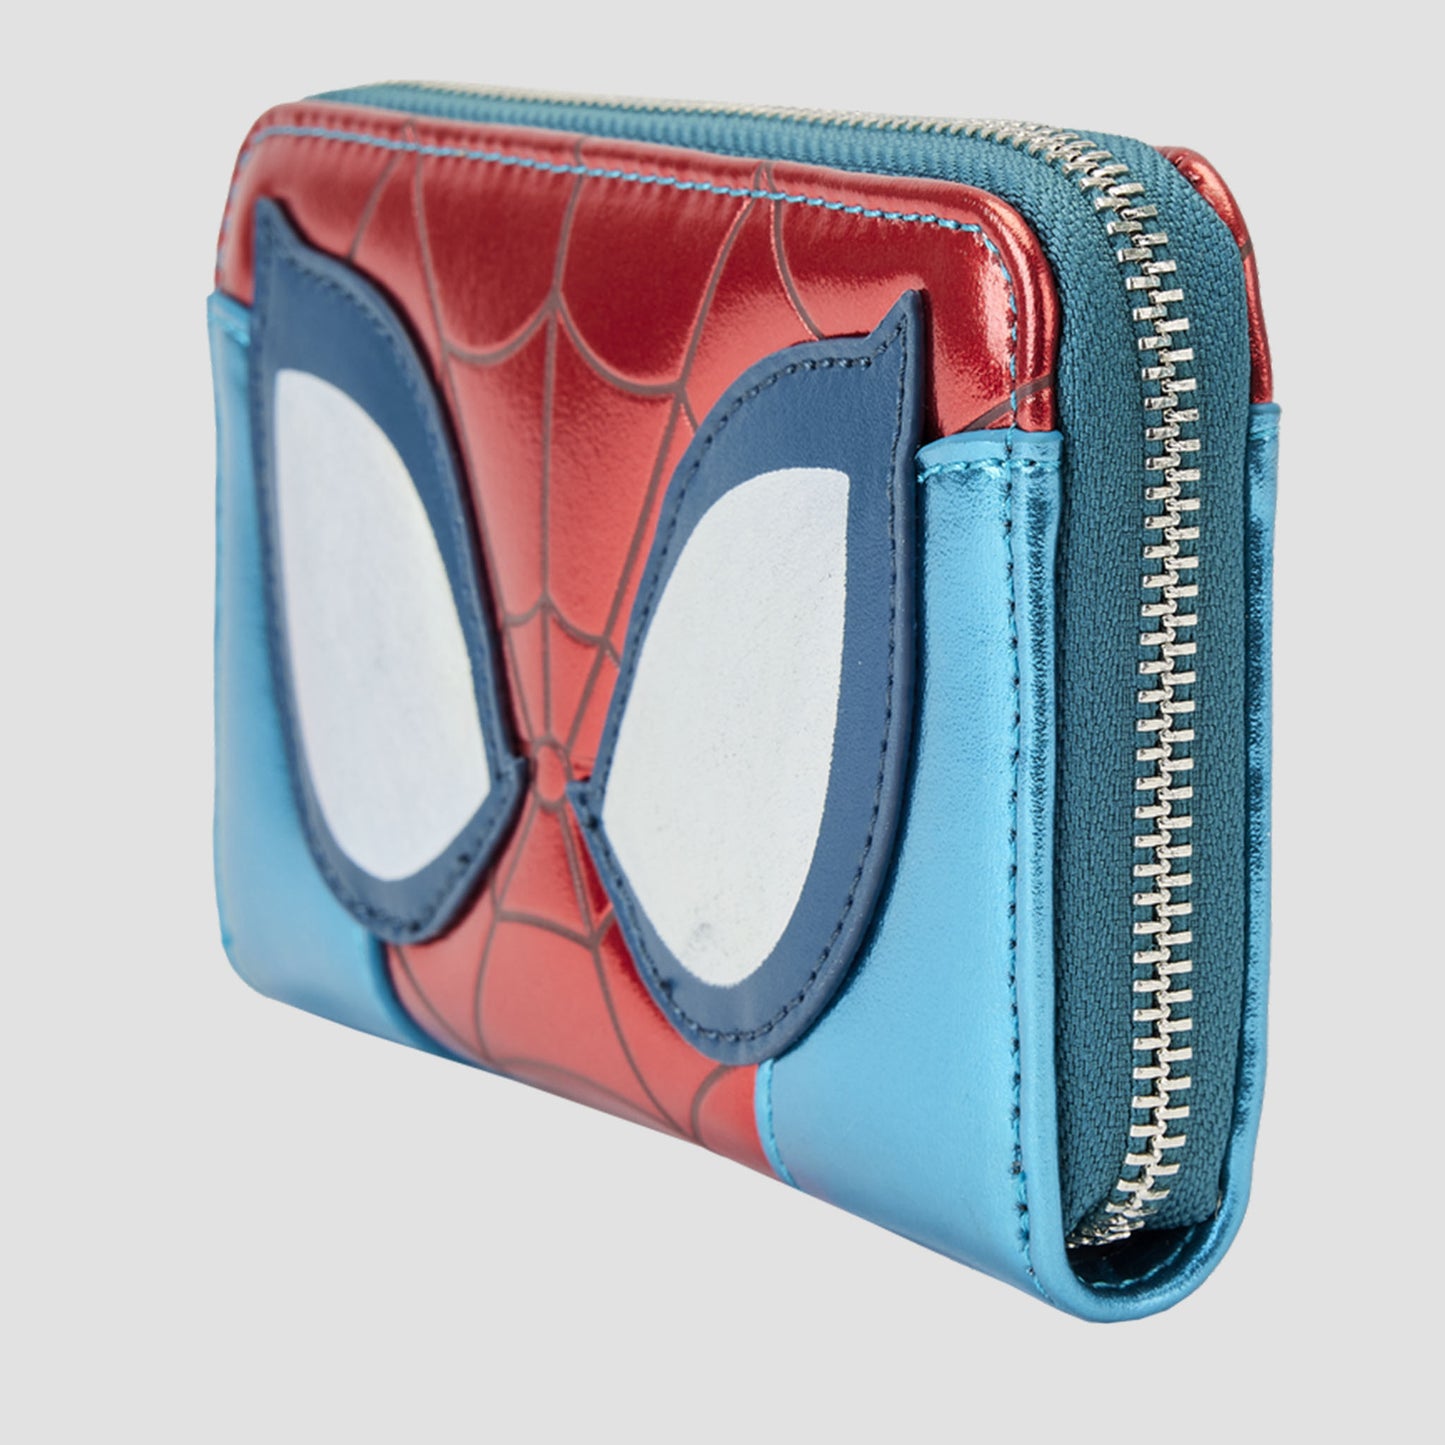 Spider-Man (Marvel) Metallic Cosplay Zip-Around Wallet by Loungefly